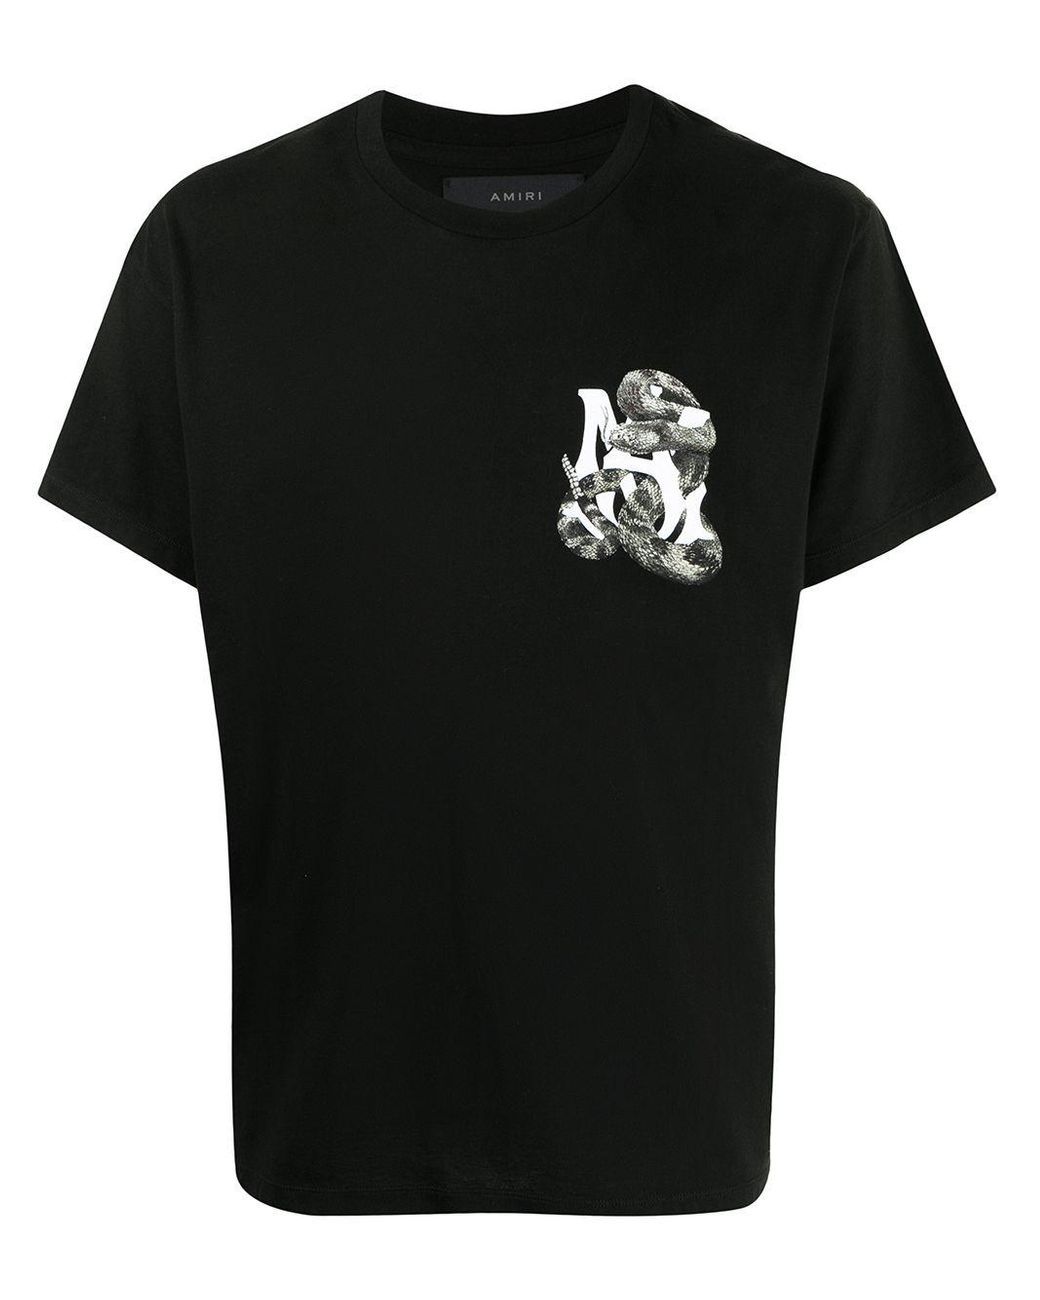 Amiri Snake-print Cotton T-shirt in Black for Men - Lyst